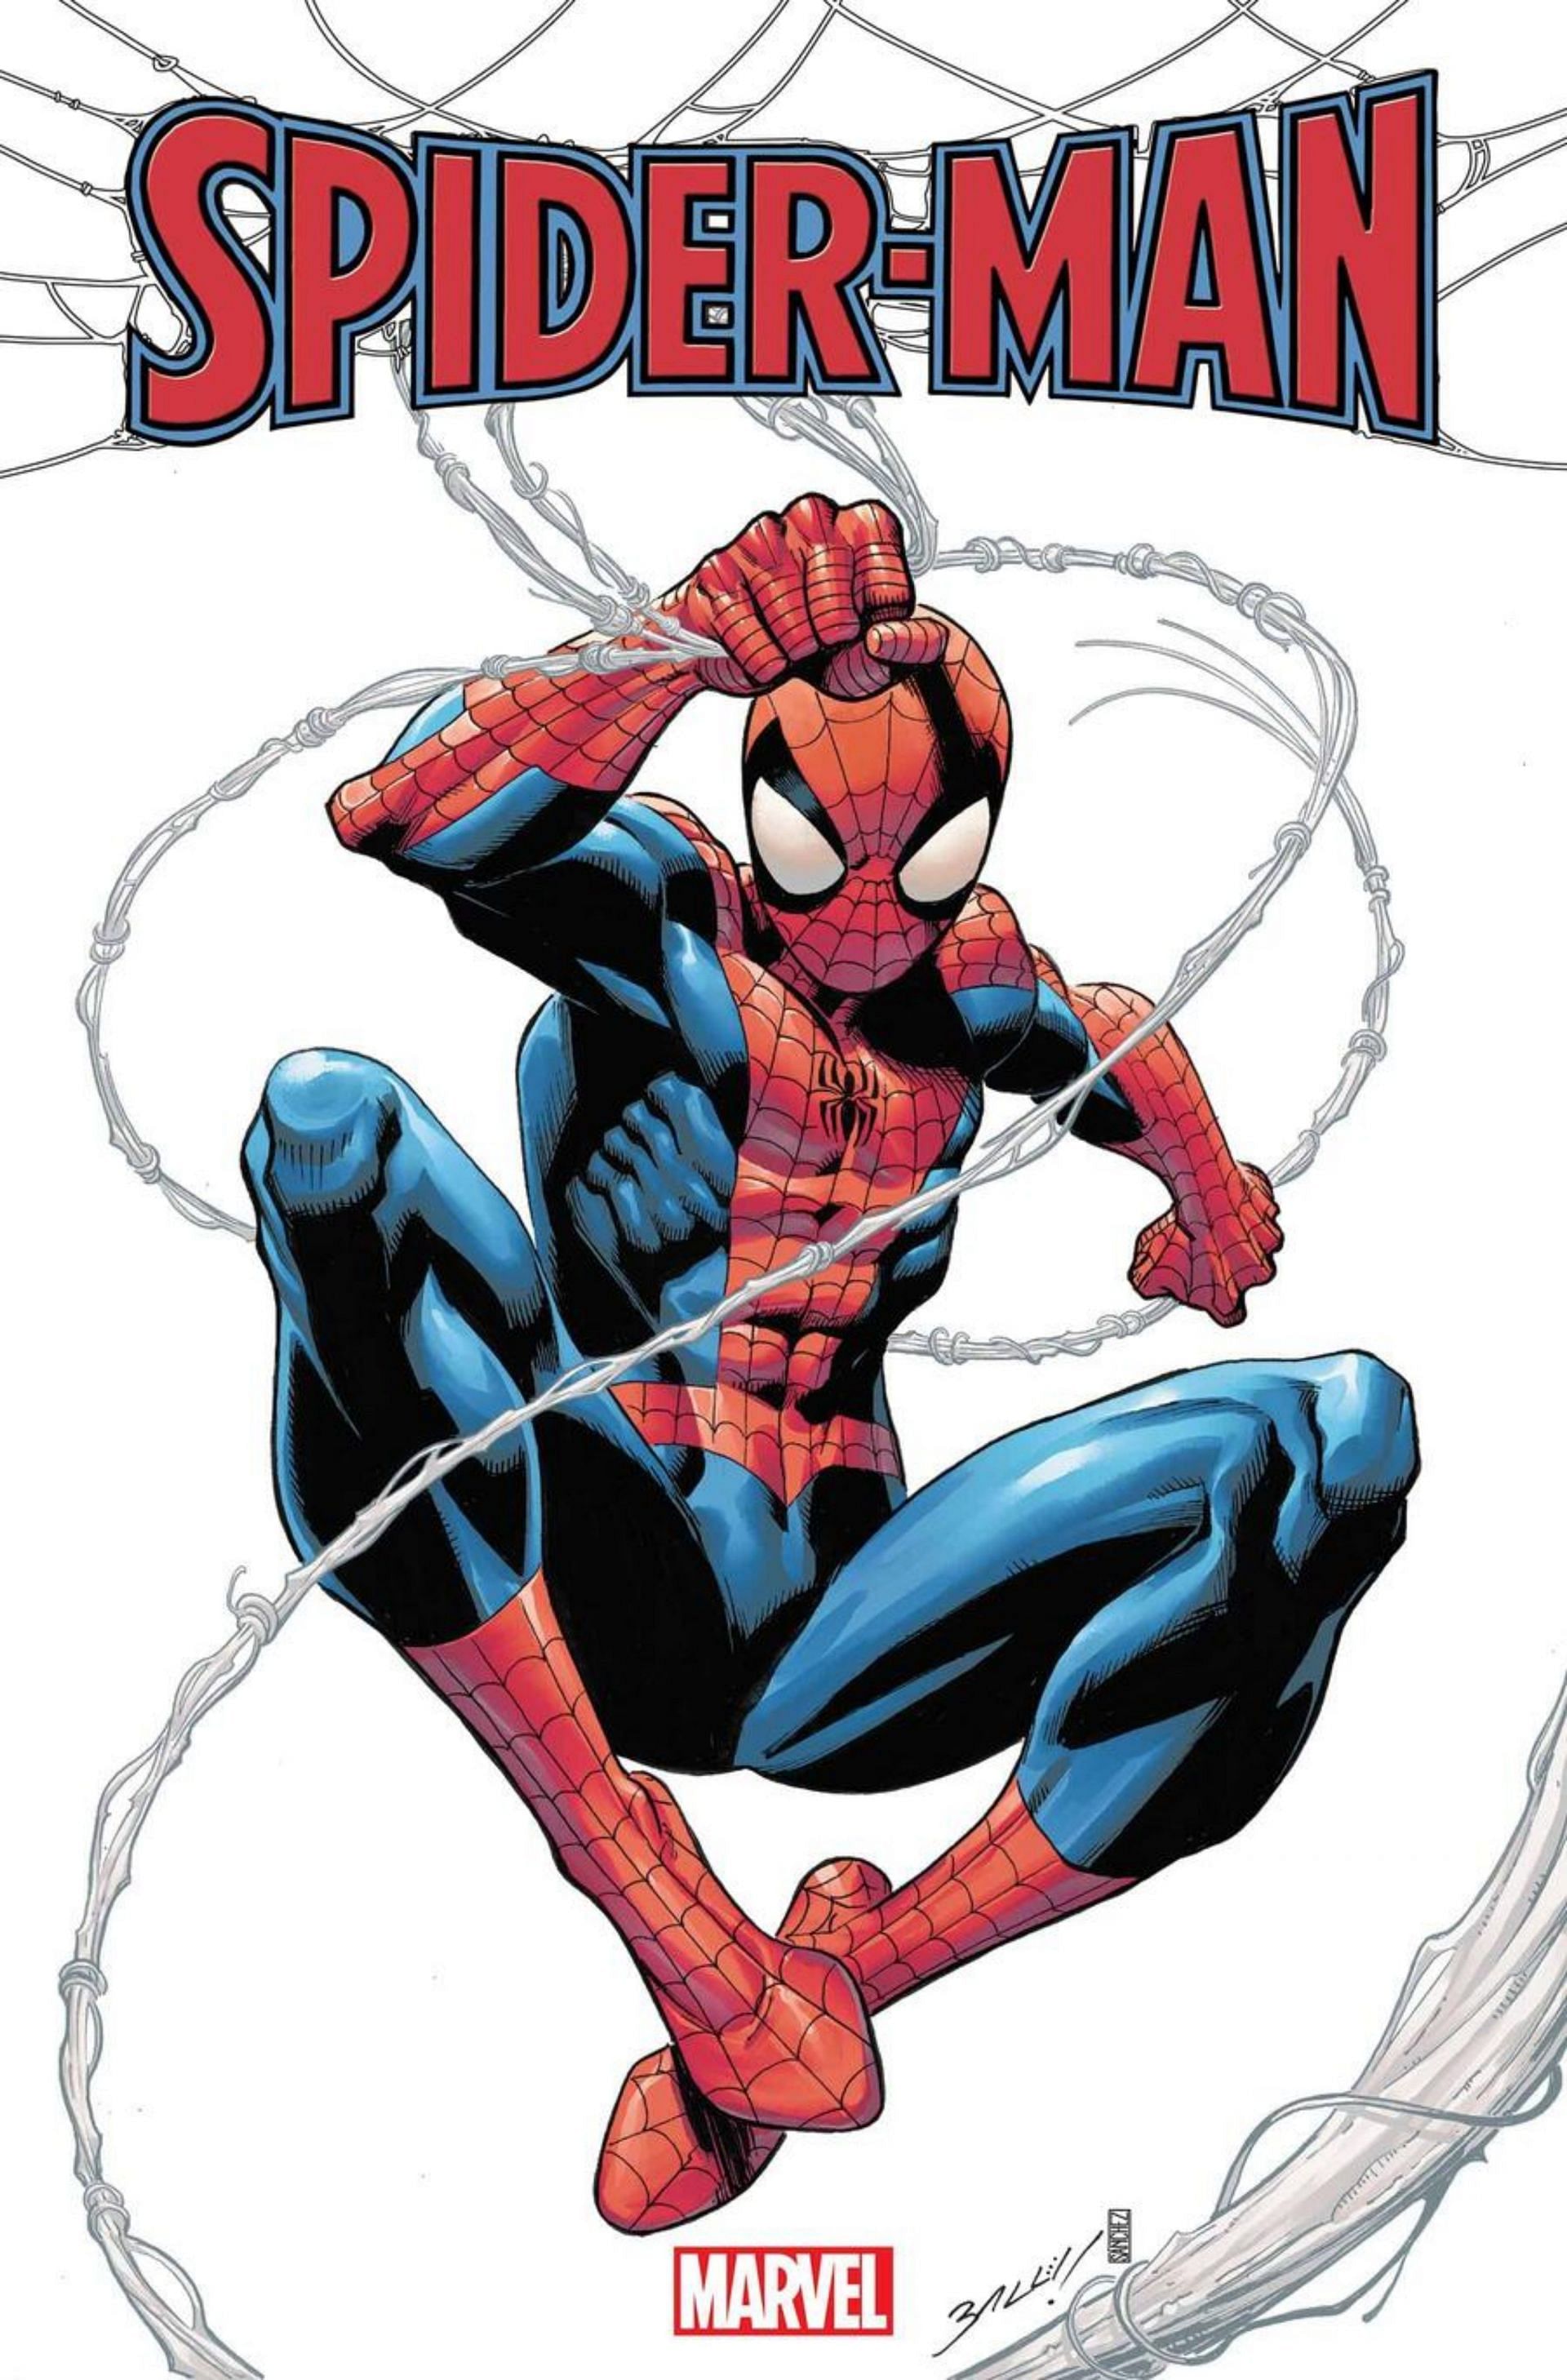 Spider-Man #1 cover (Image via Marvel Comics)